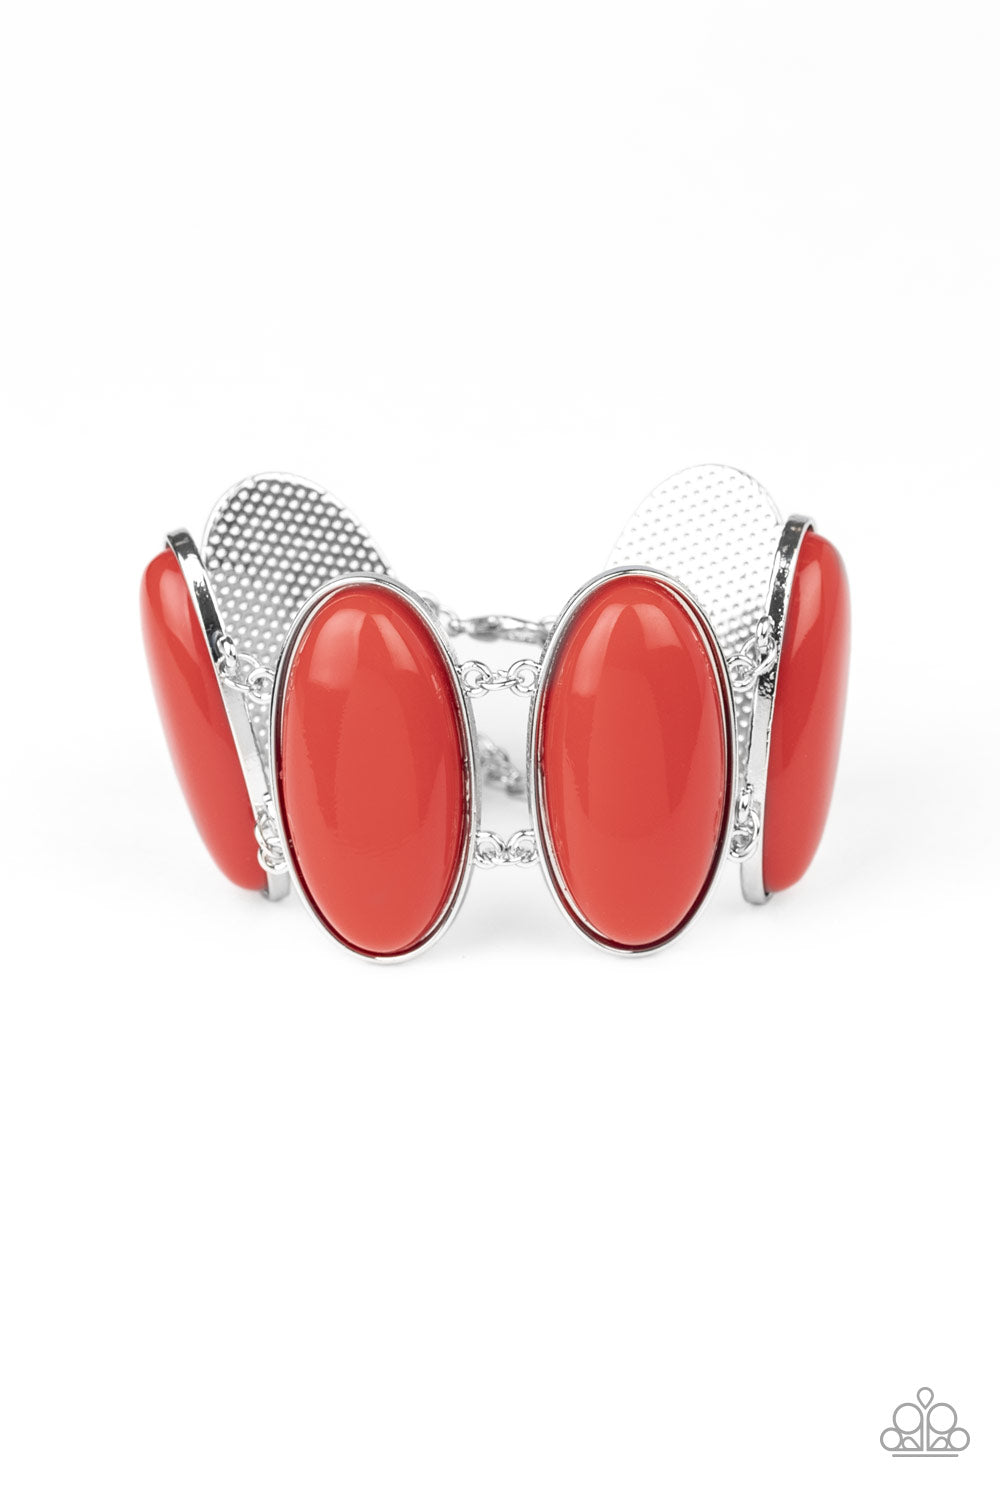 Paparazzi Accessories Power Pop - Red Bracelets - Lady T Accessories